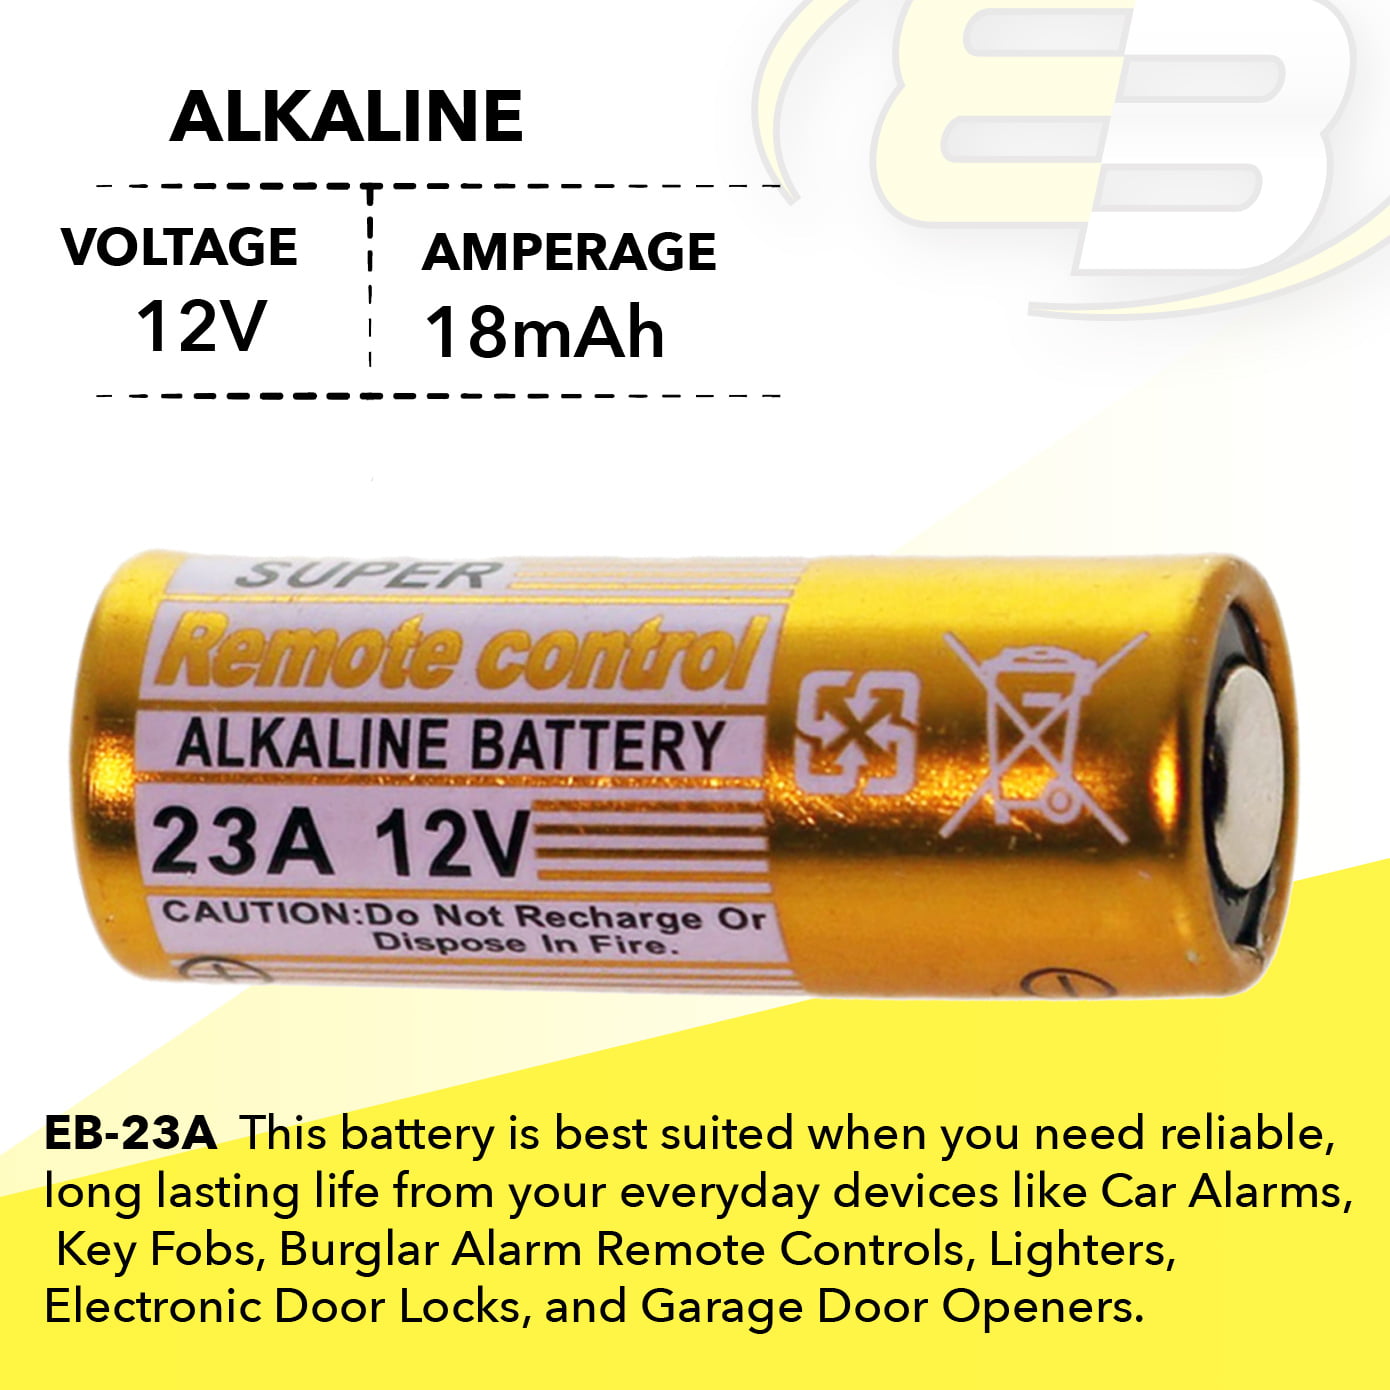 Alkaline battery V23GA, SBA V23GA 1BP